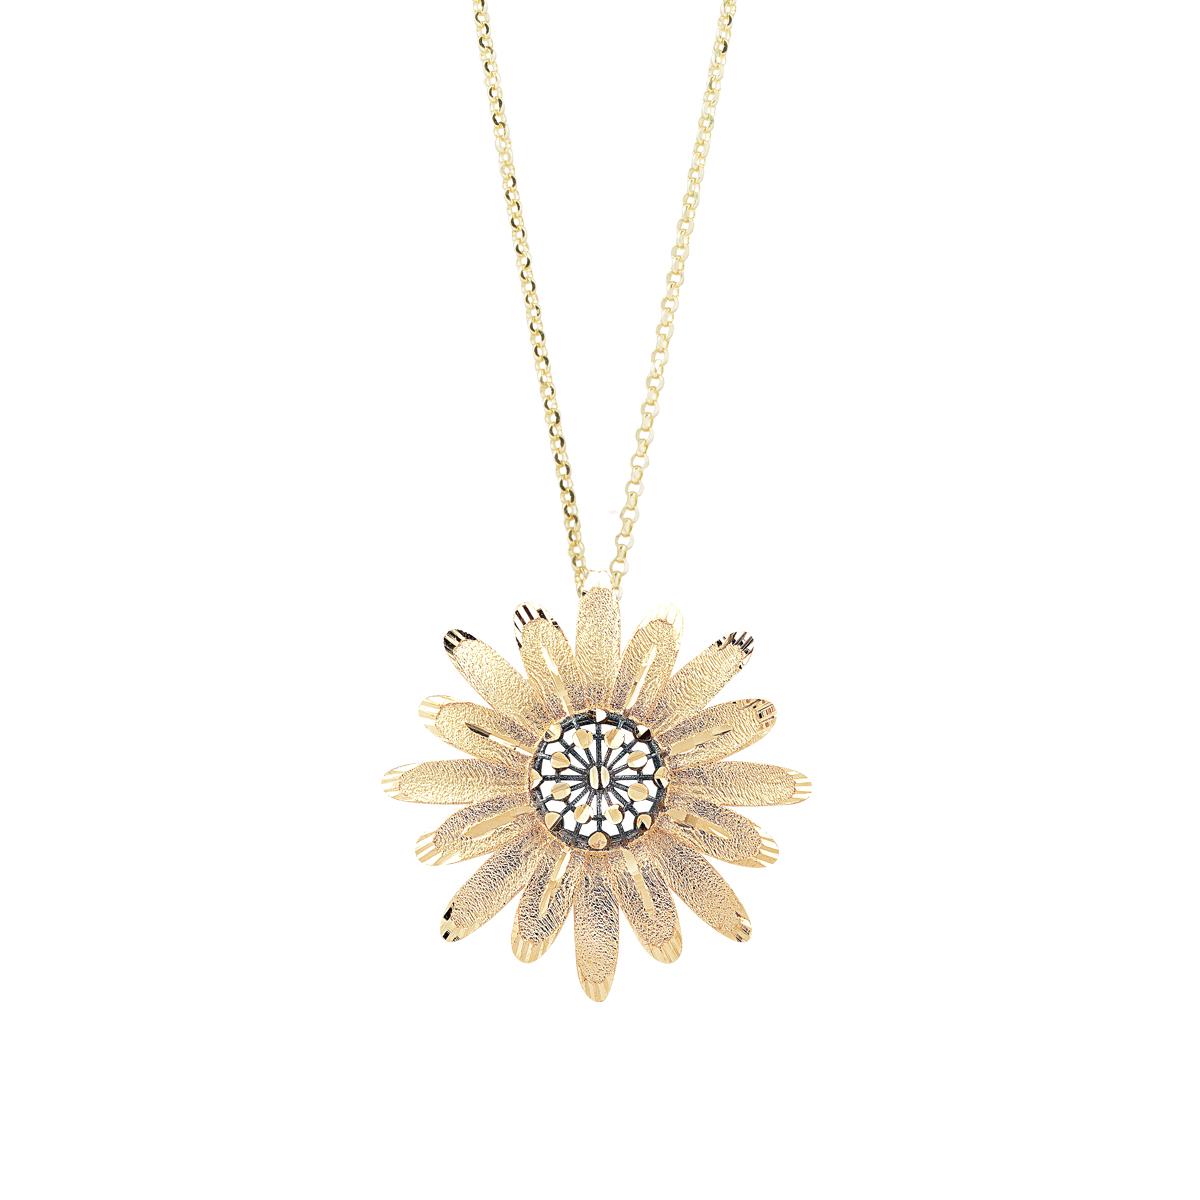 Flower necklace in 18 kt gold